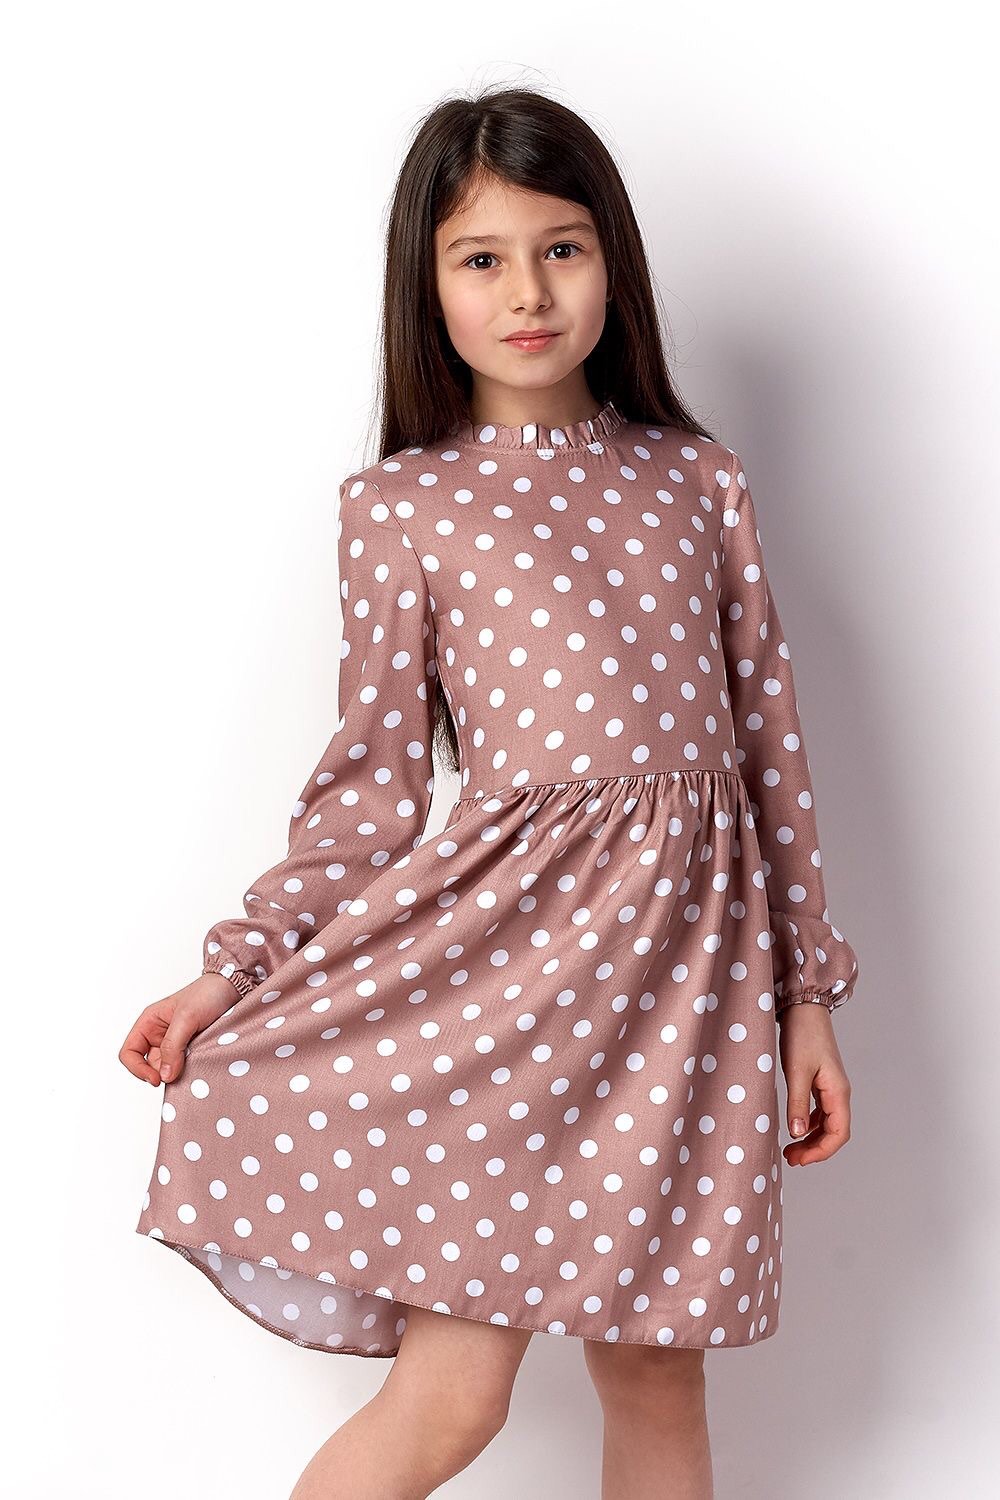 Платье для девочки Mevis Горох бежевое 3328-04 - ціна